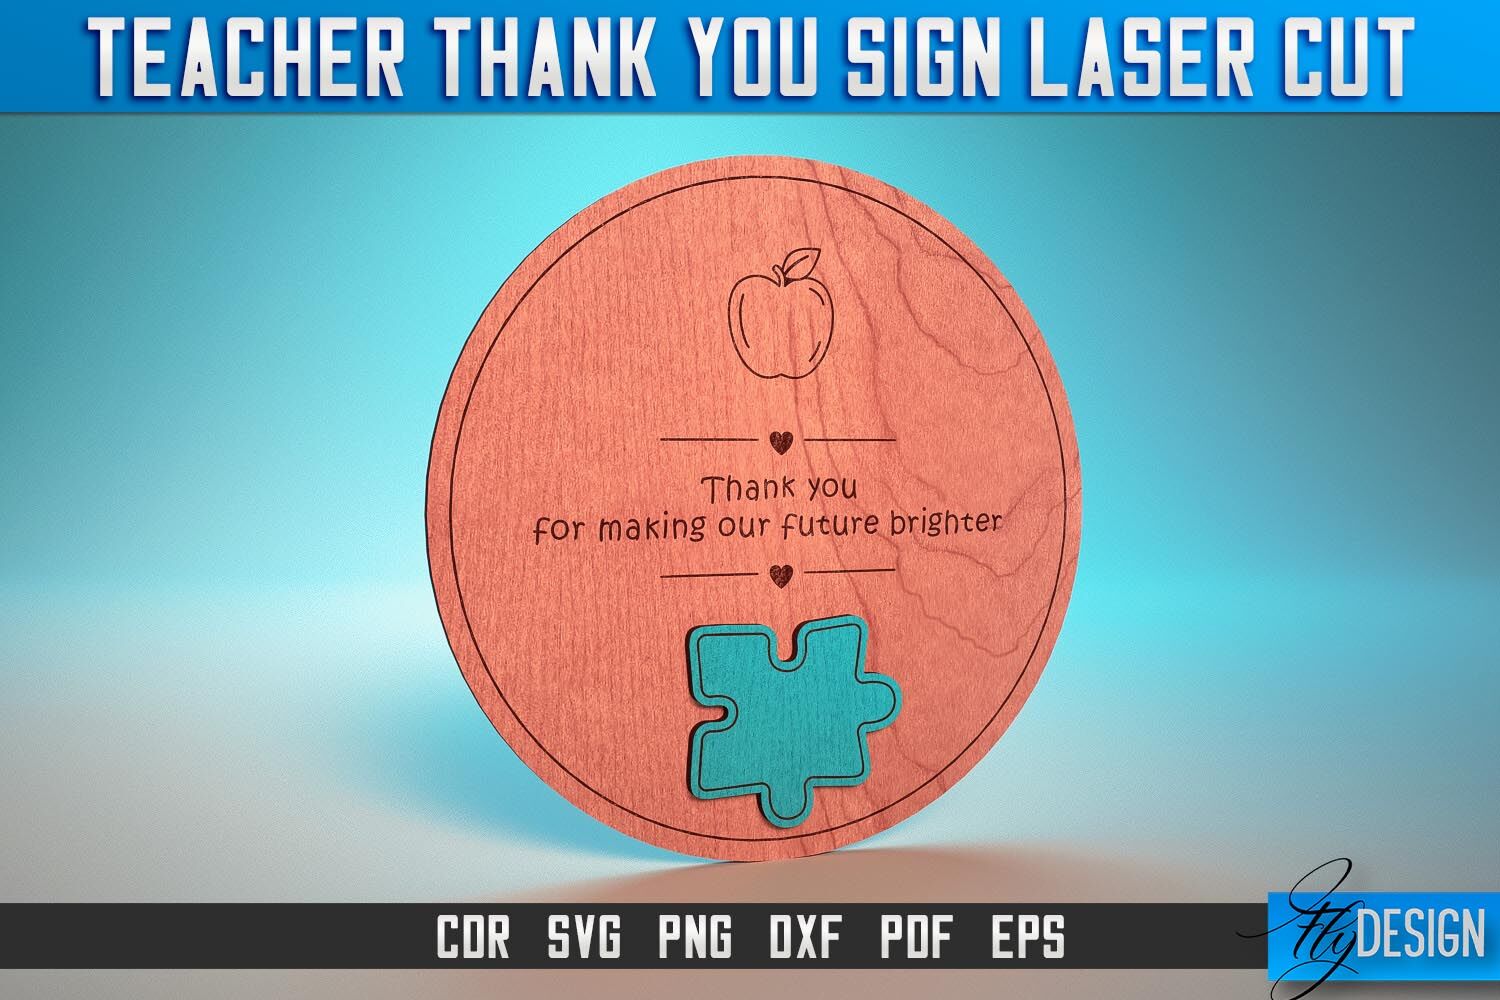 Thank You Teacher Sign Laser Cut Svg Teacher Laser Cut Svg Design By Fly Design Thehungryjpeg 